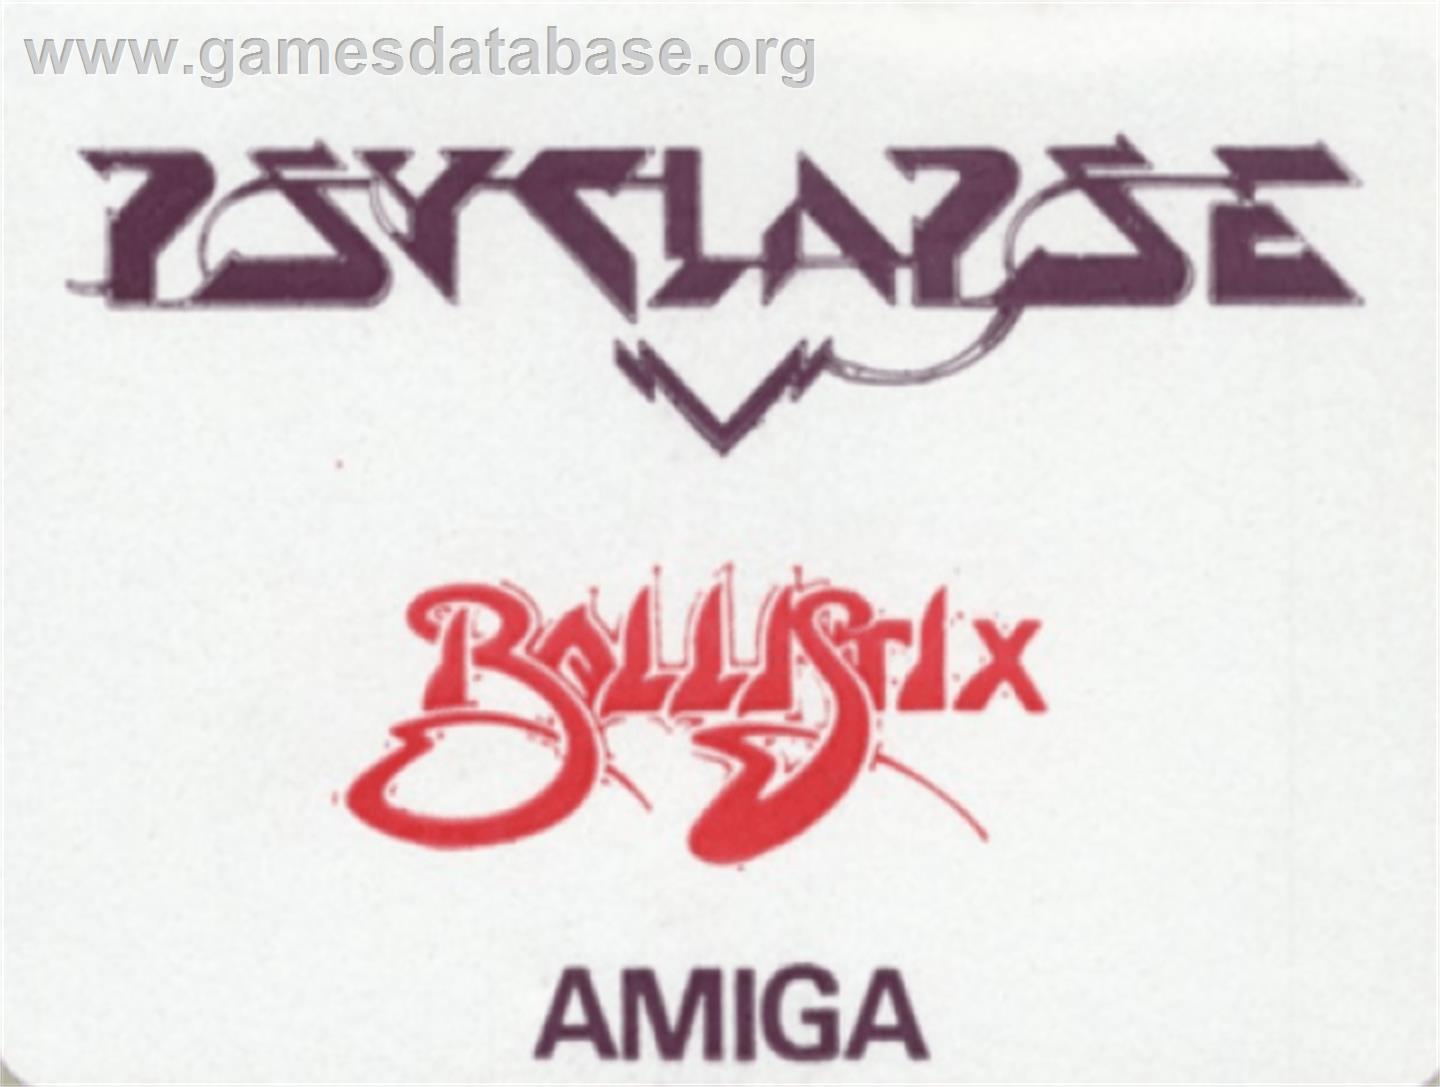 Ballistix - Commodore Amiga - Artwork - Cartridge Top